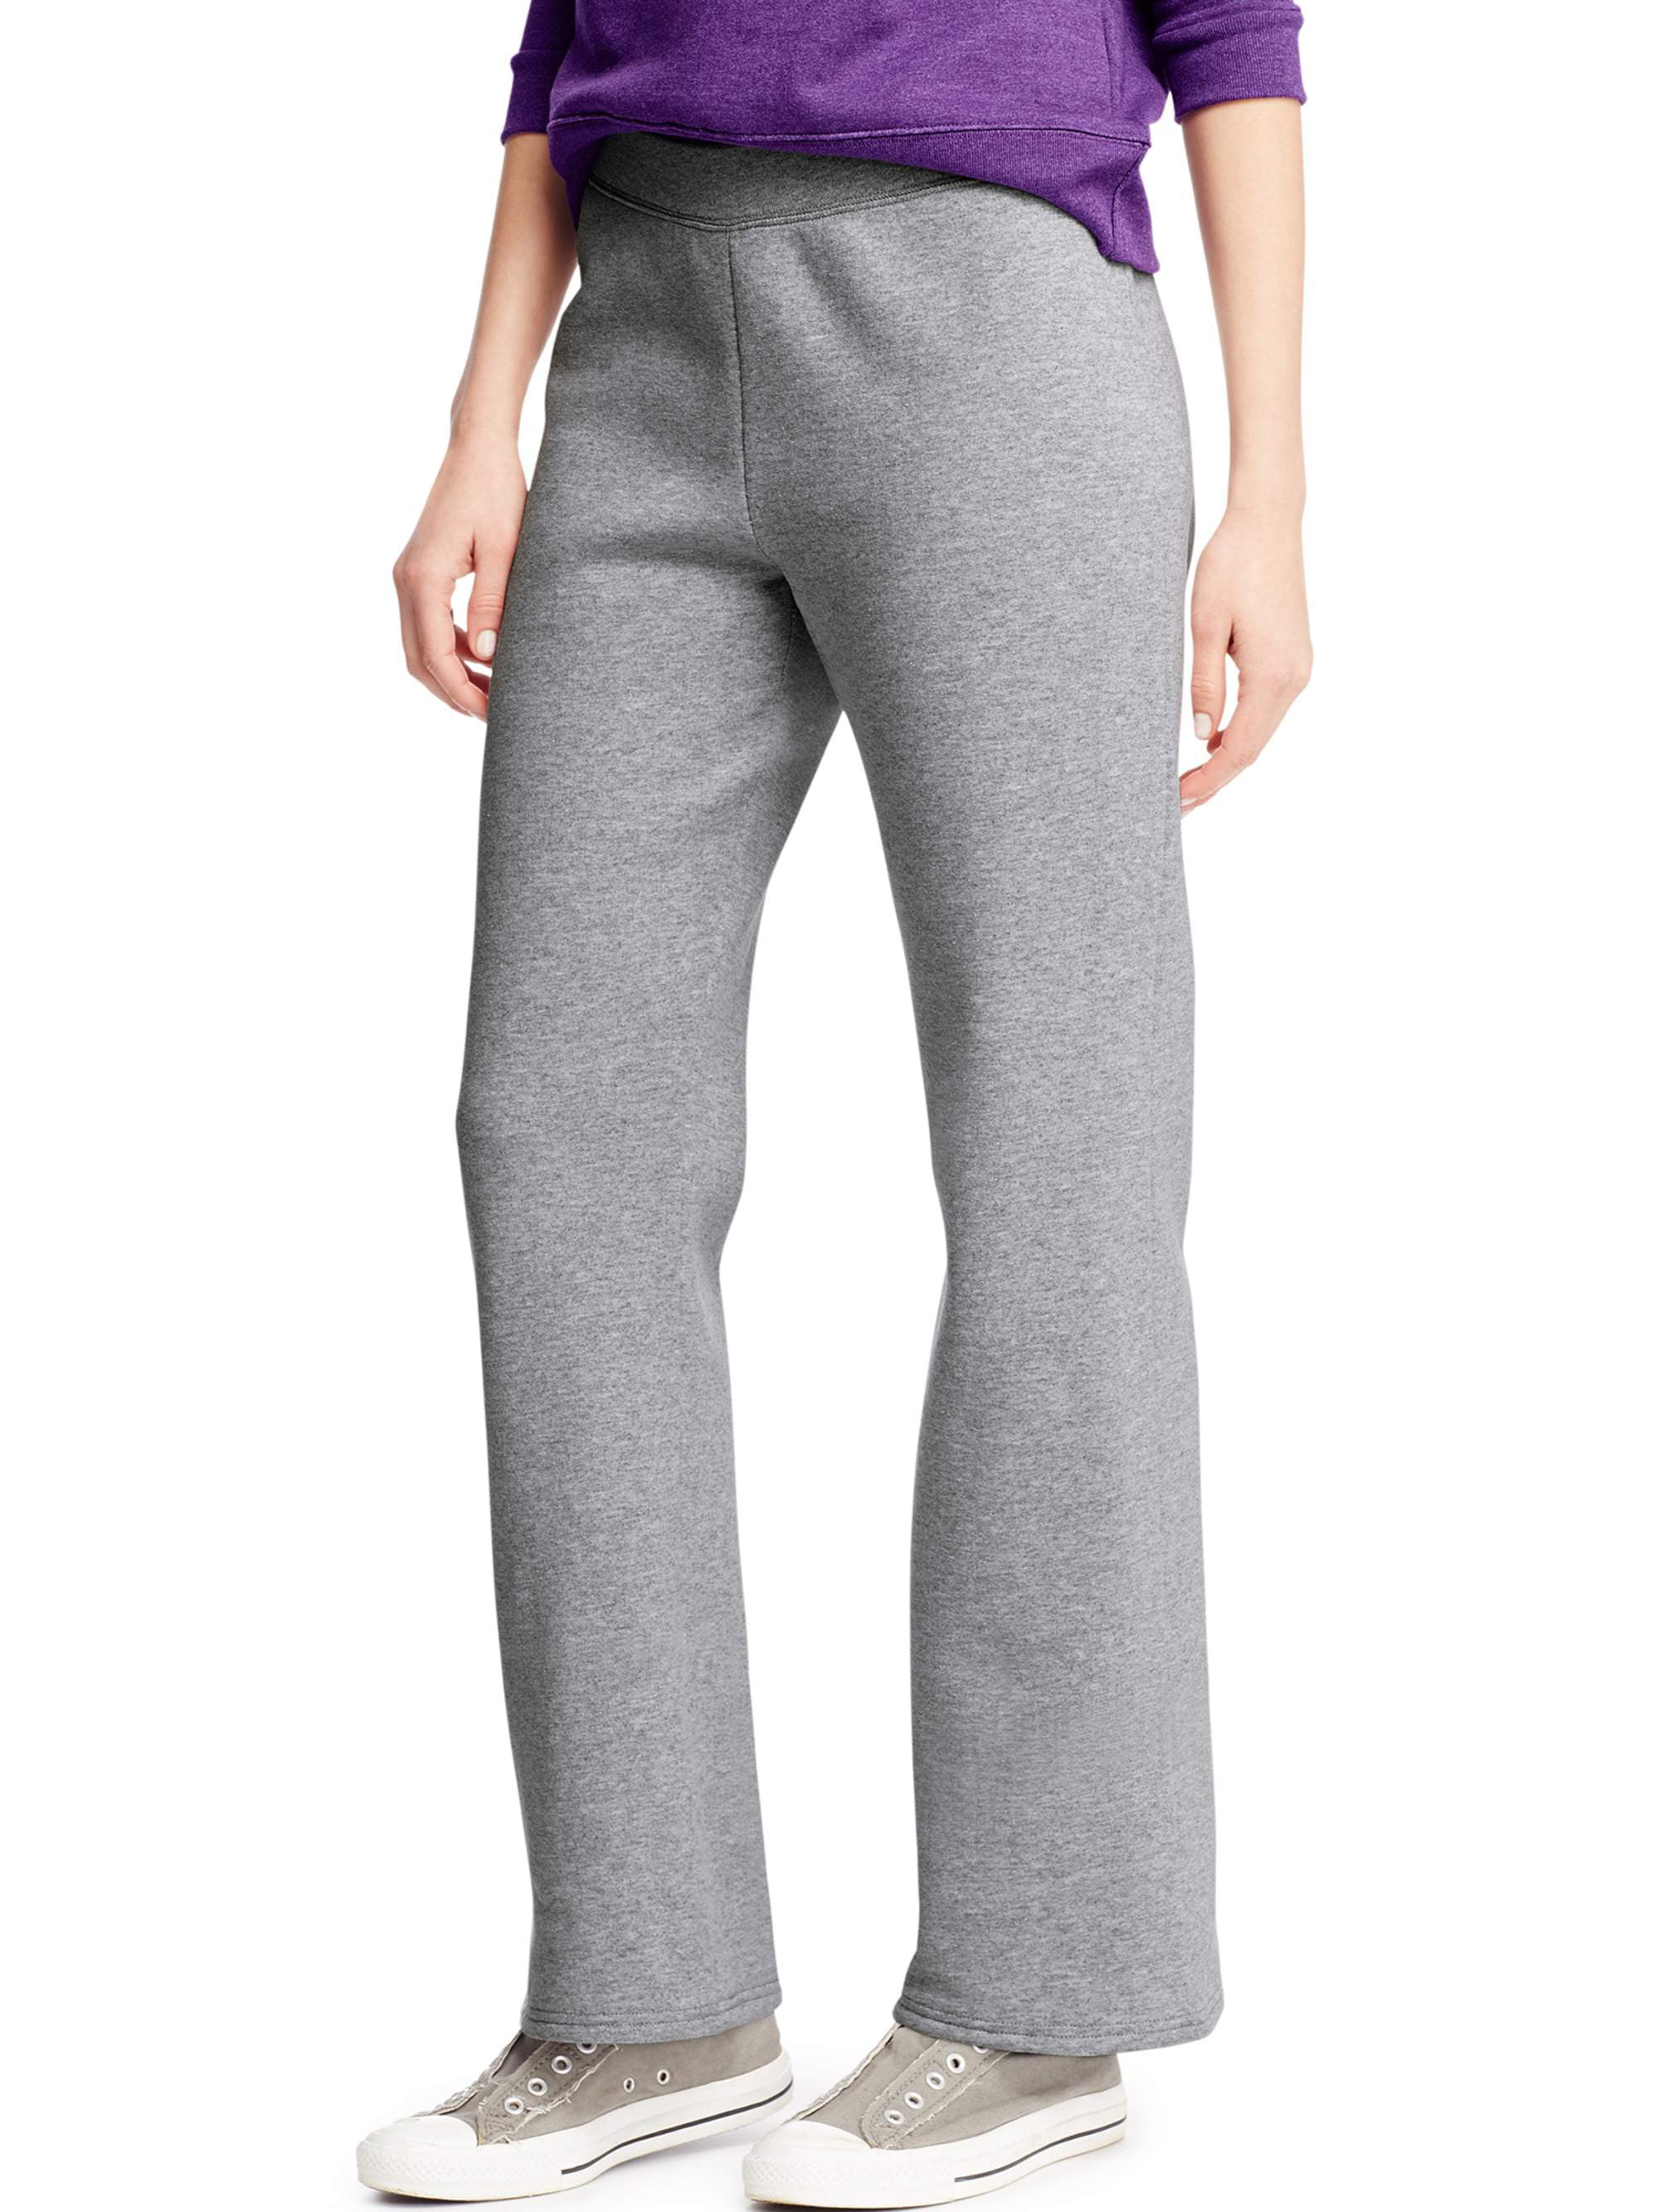 Hanes Women's Essential Fleece Sweatpant available in Regular and Petite -  Walmart.com